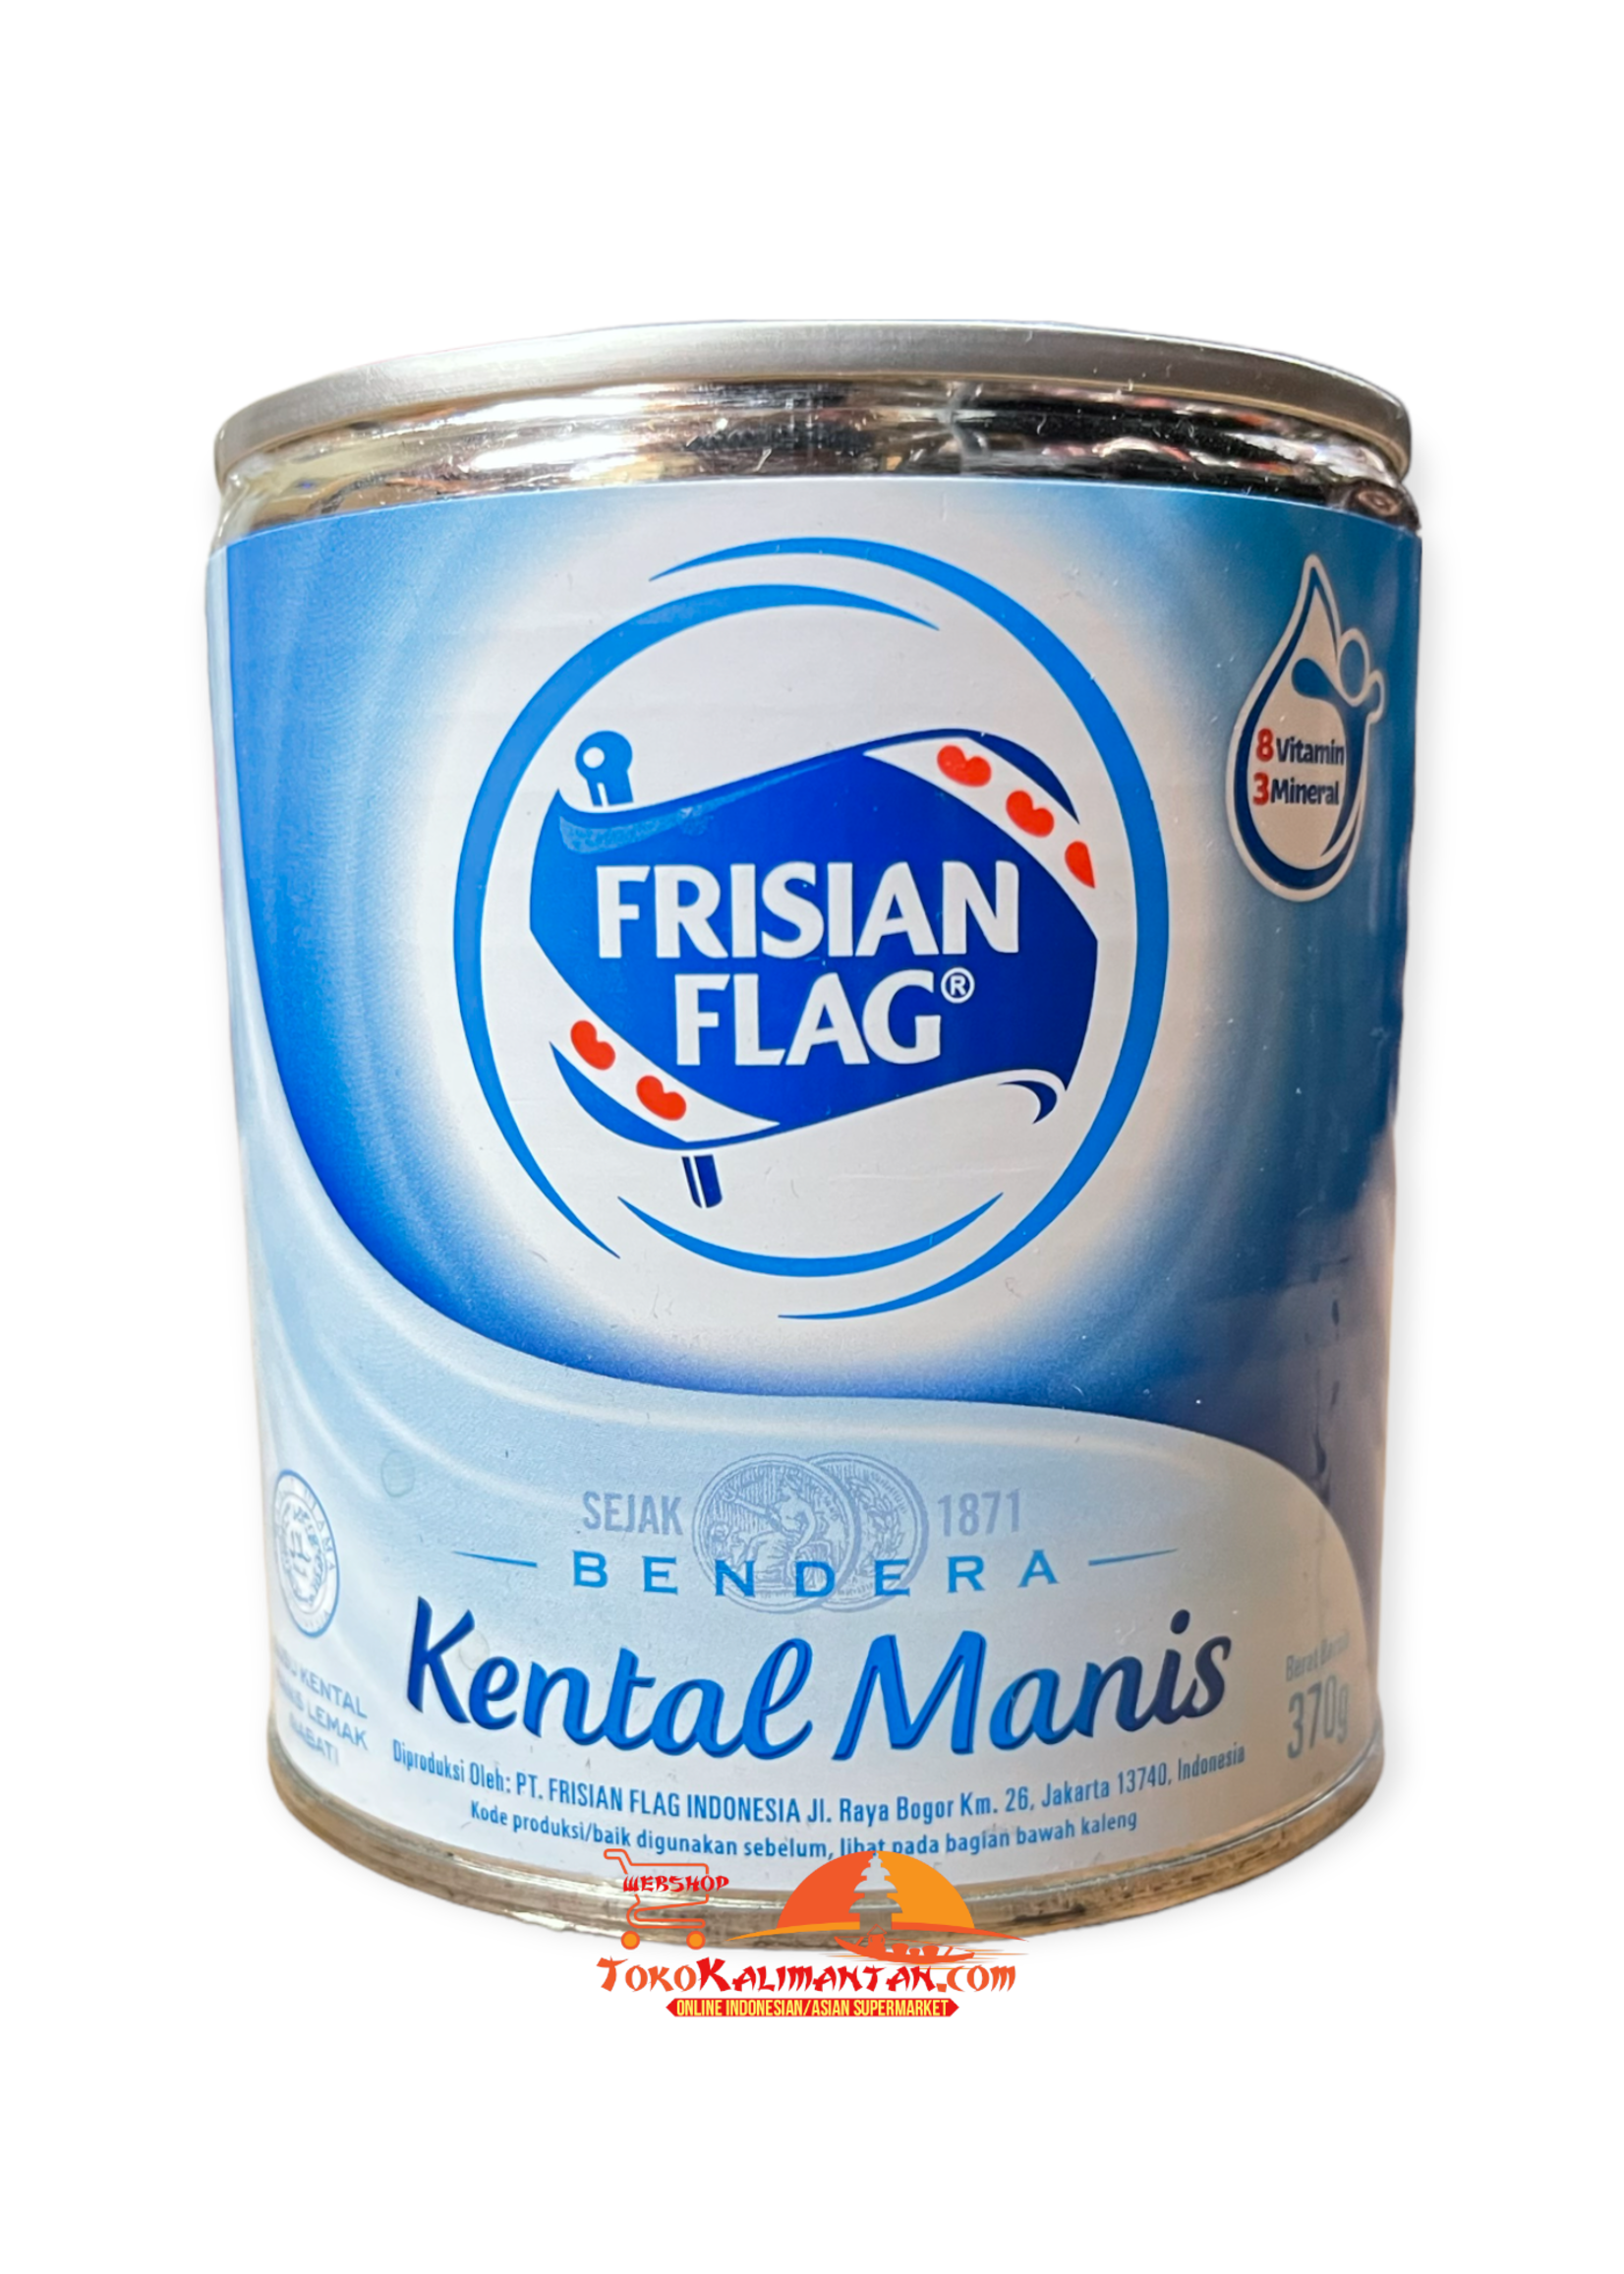 Frisian Flag Frisian Flag vesie indonesia  - Bendera Rasa Kental Manis  kaleng 370 g